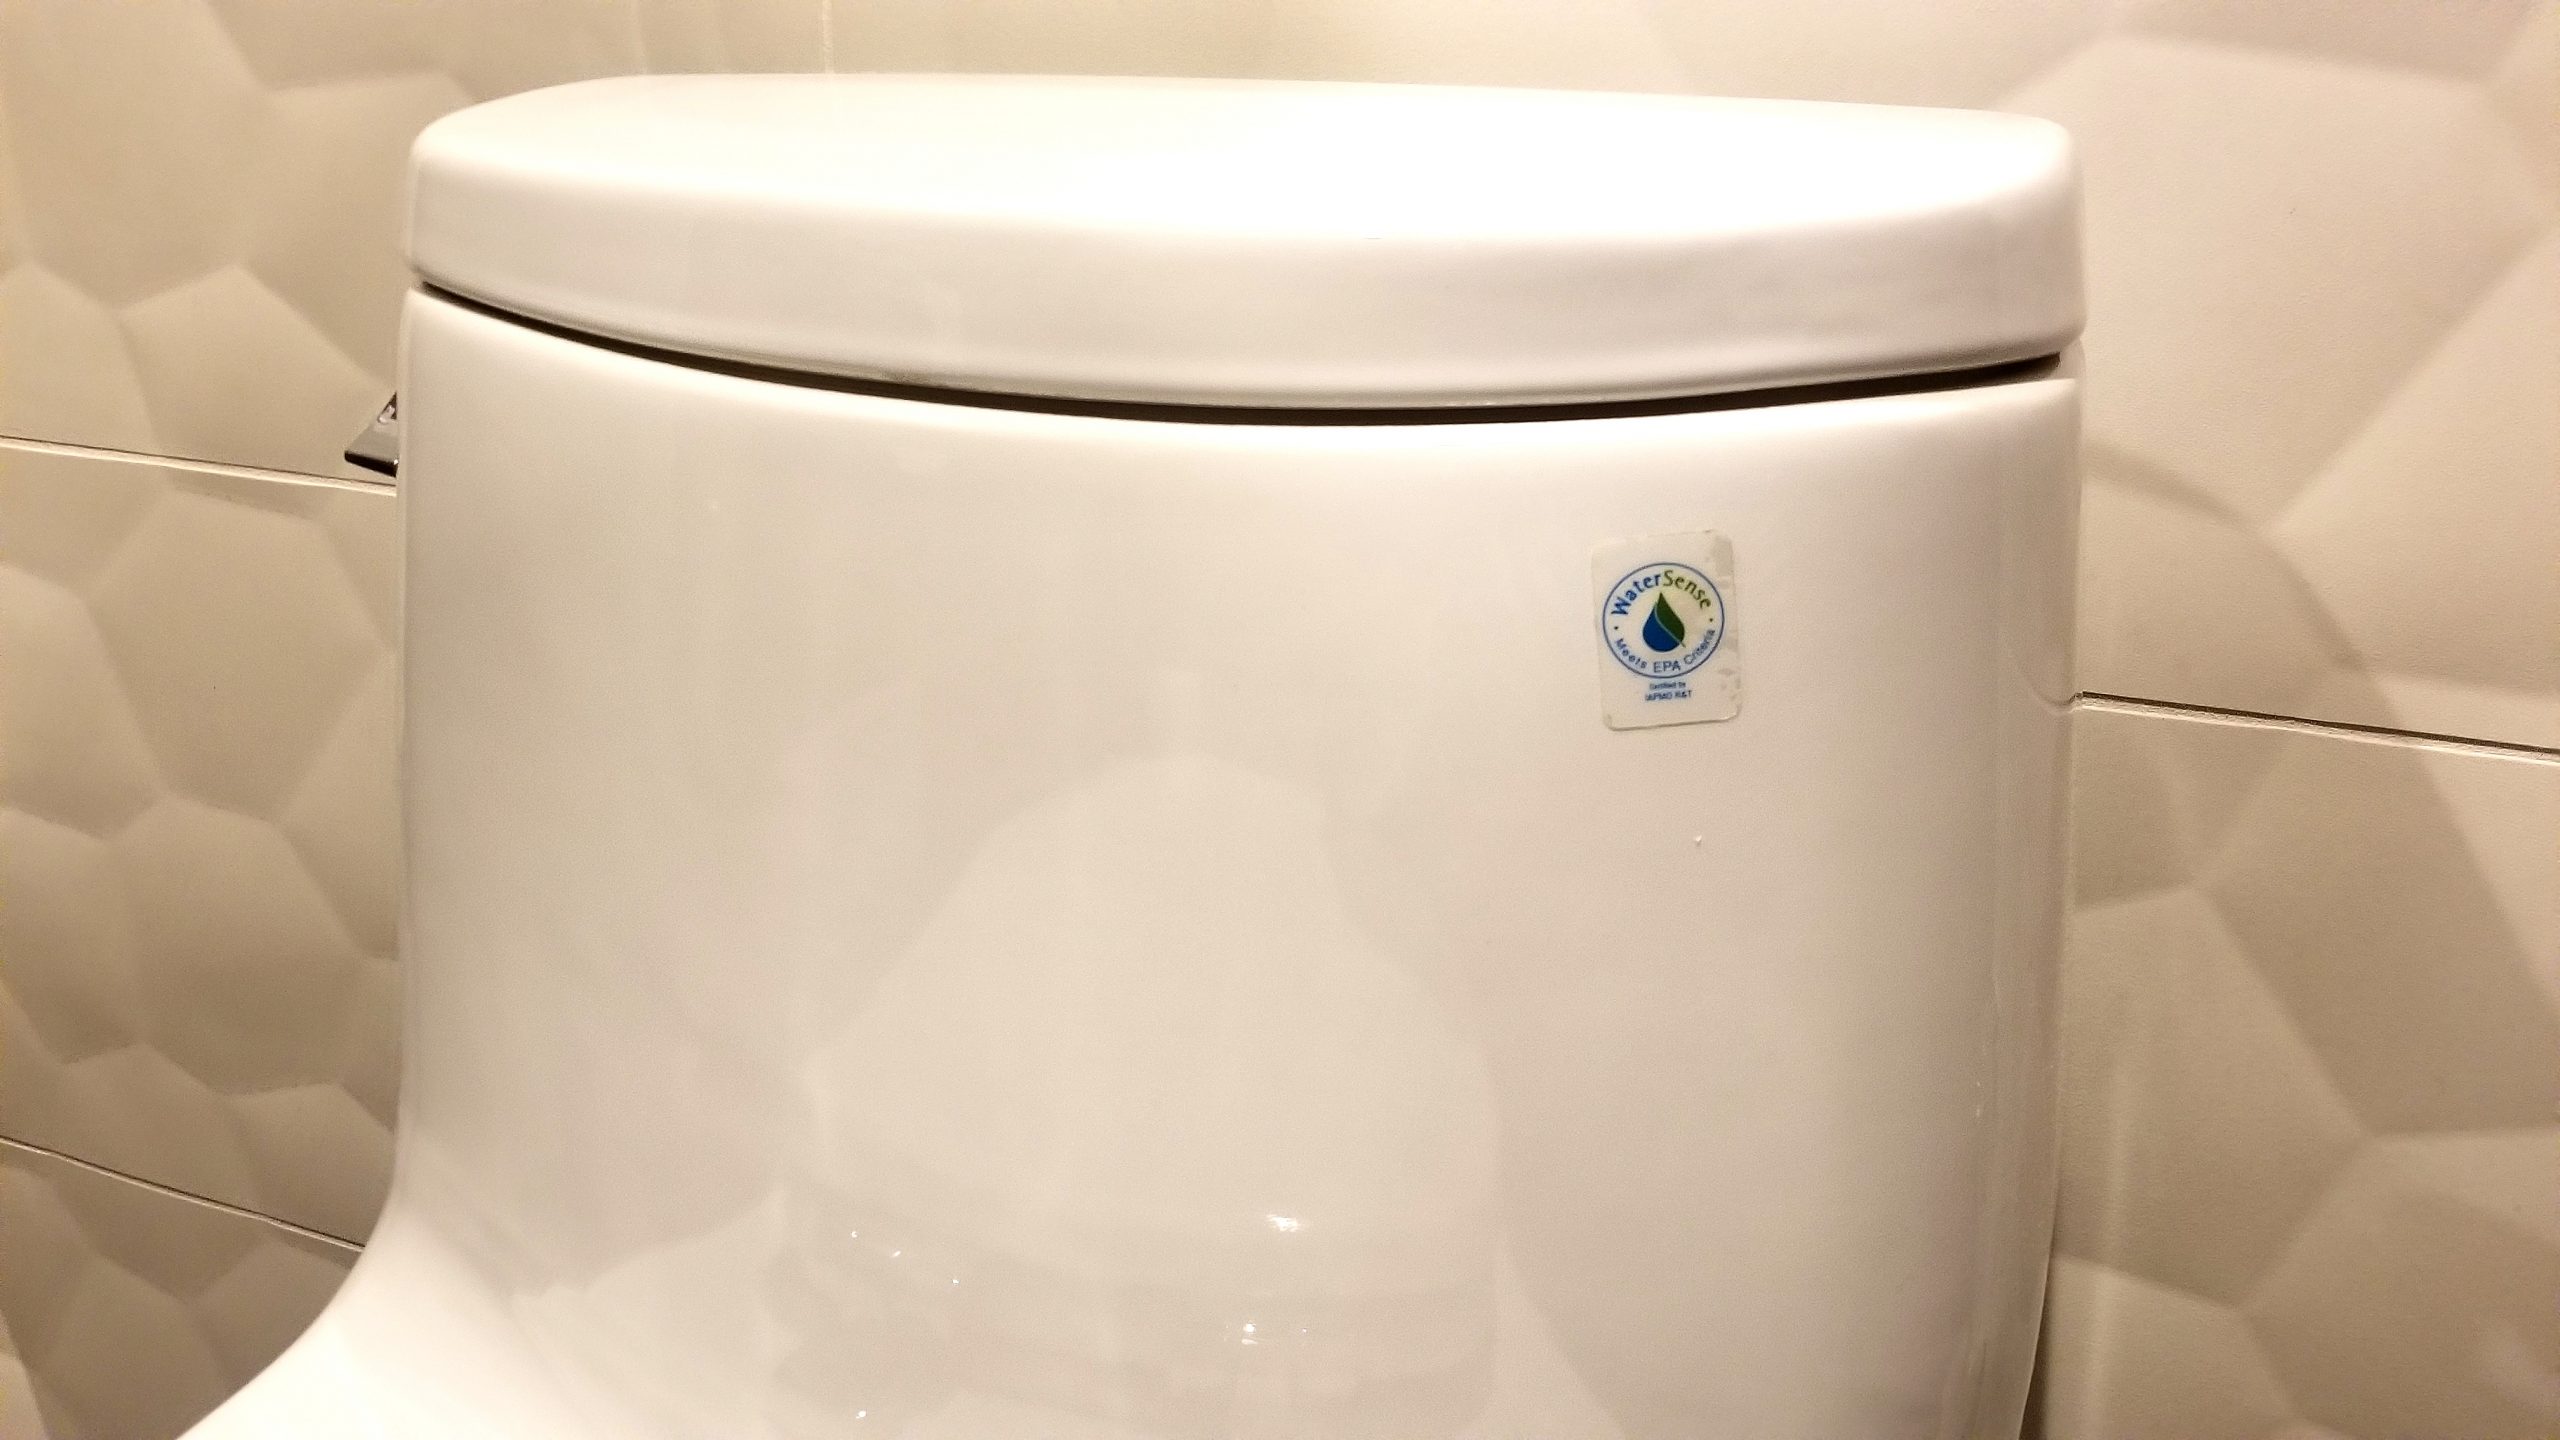 EPA WaterSense labeled toilet